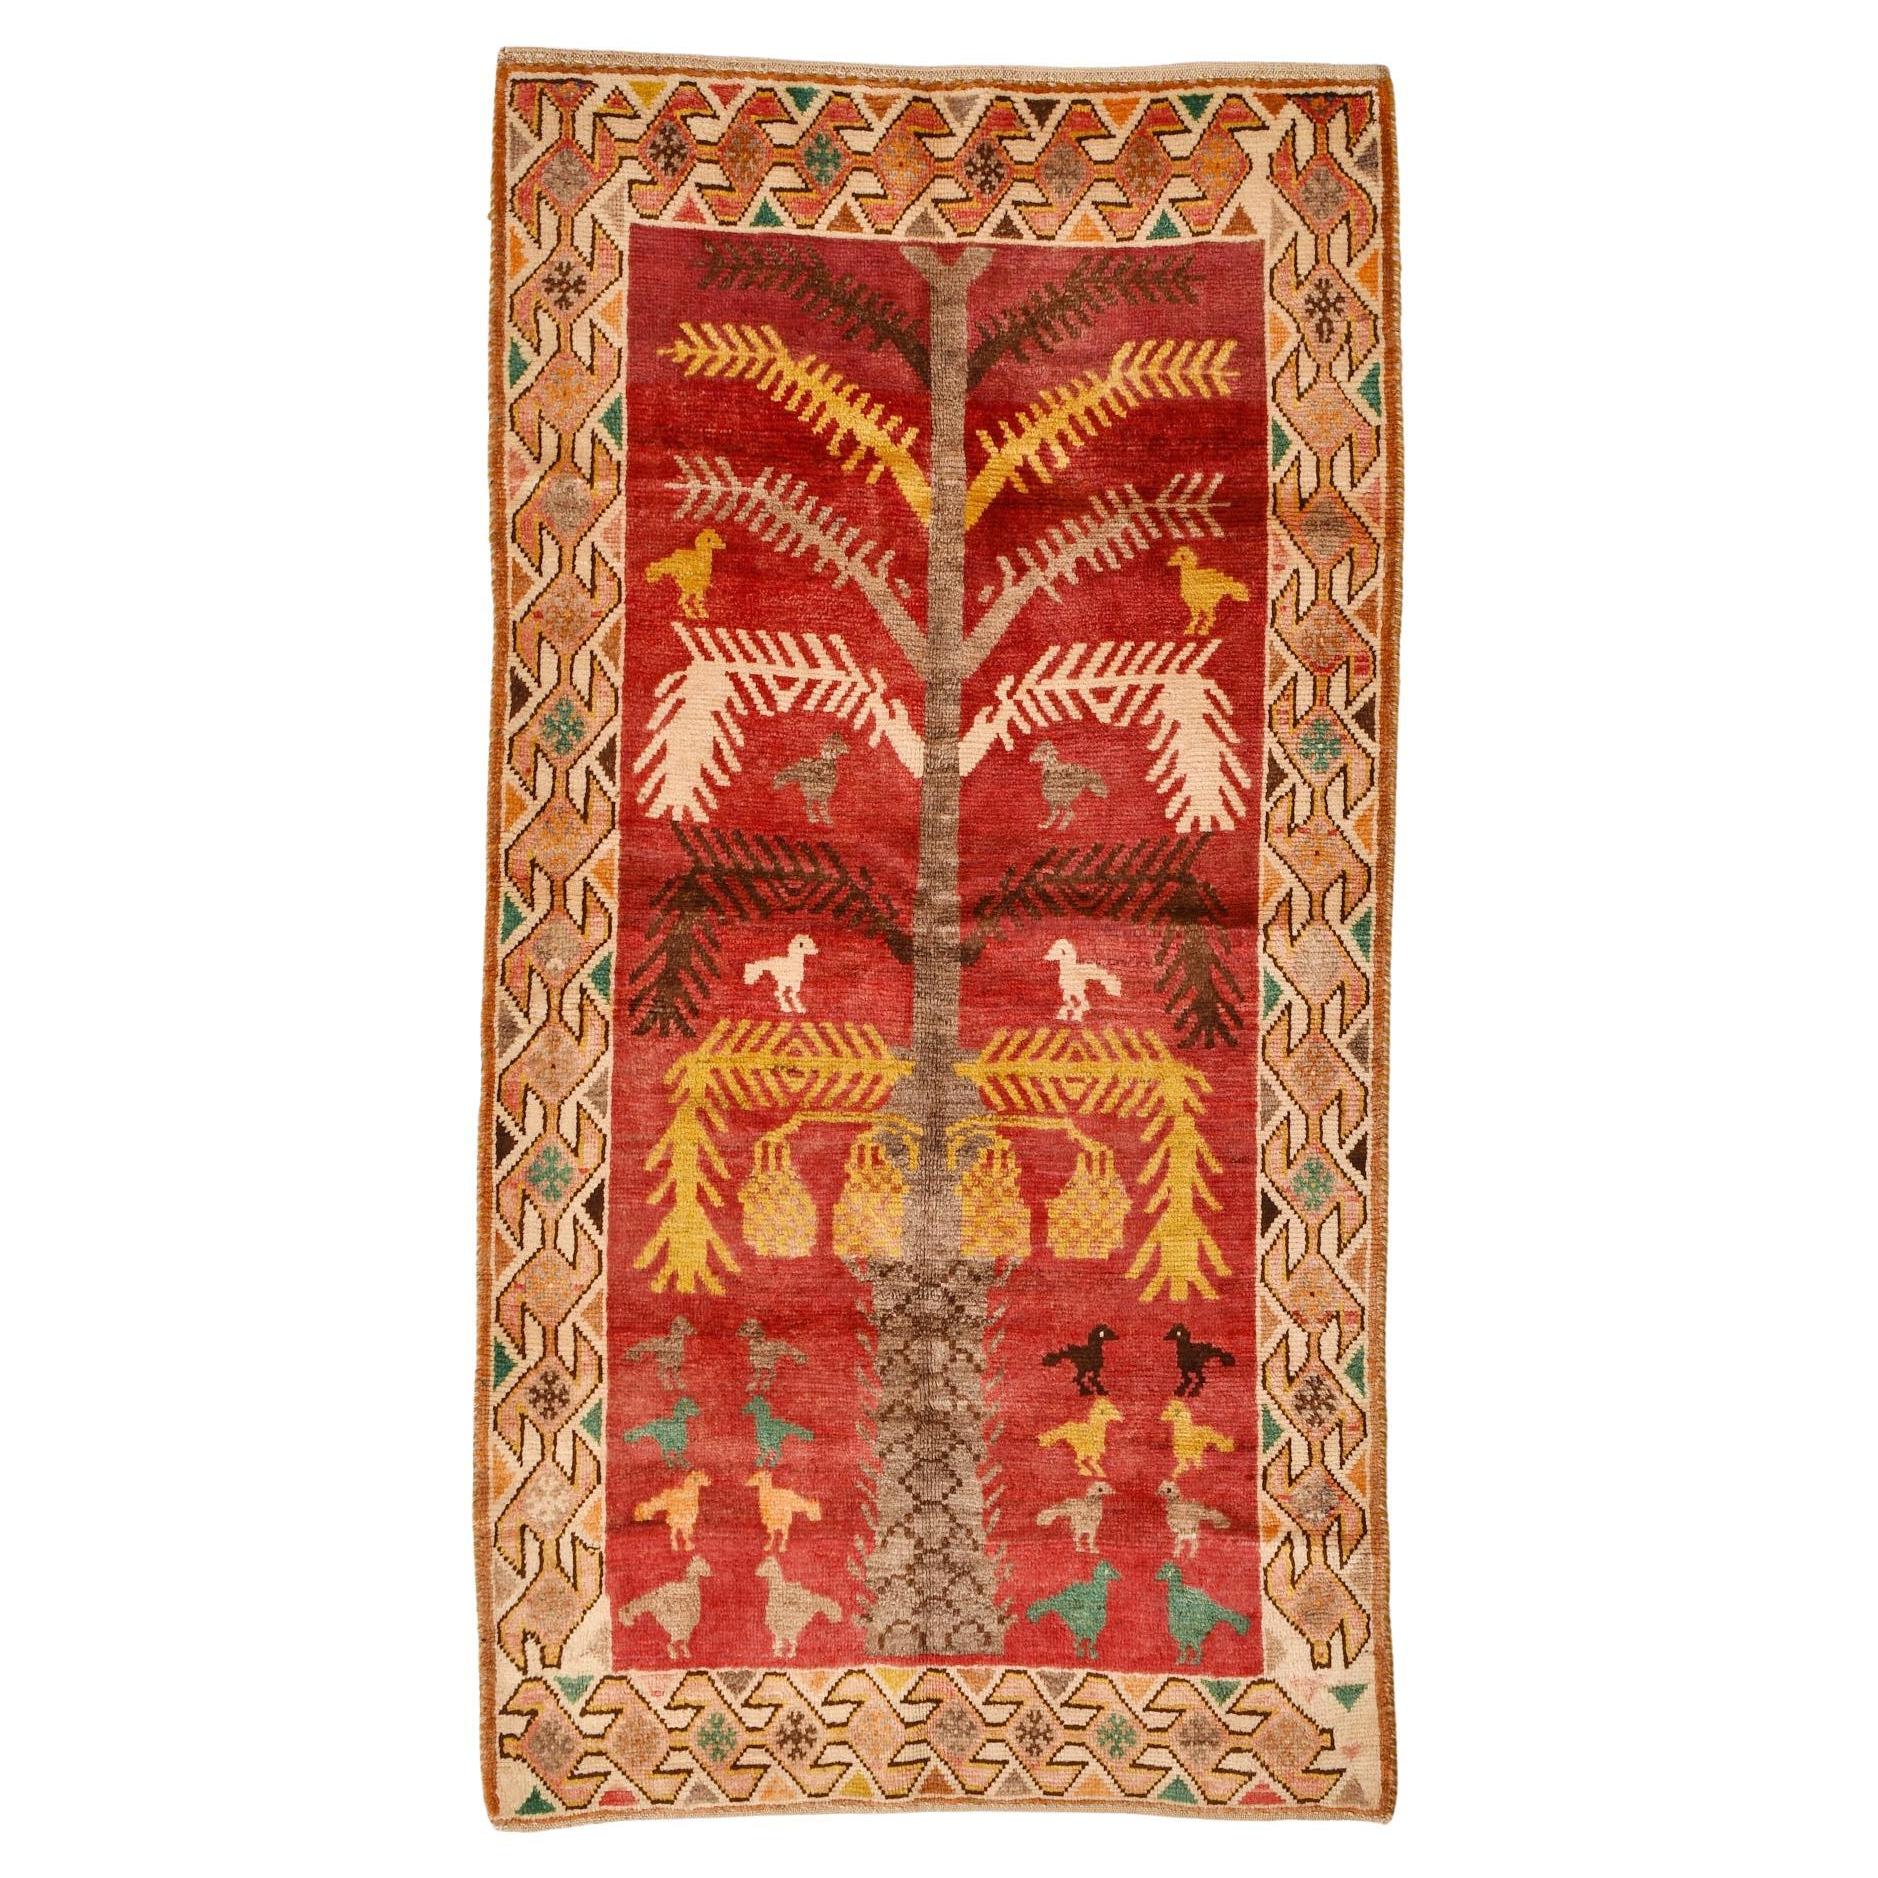 Old Nomadic Oriental Carpet de ma collection privée